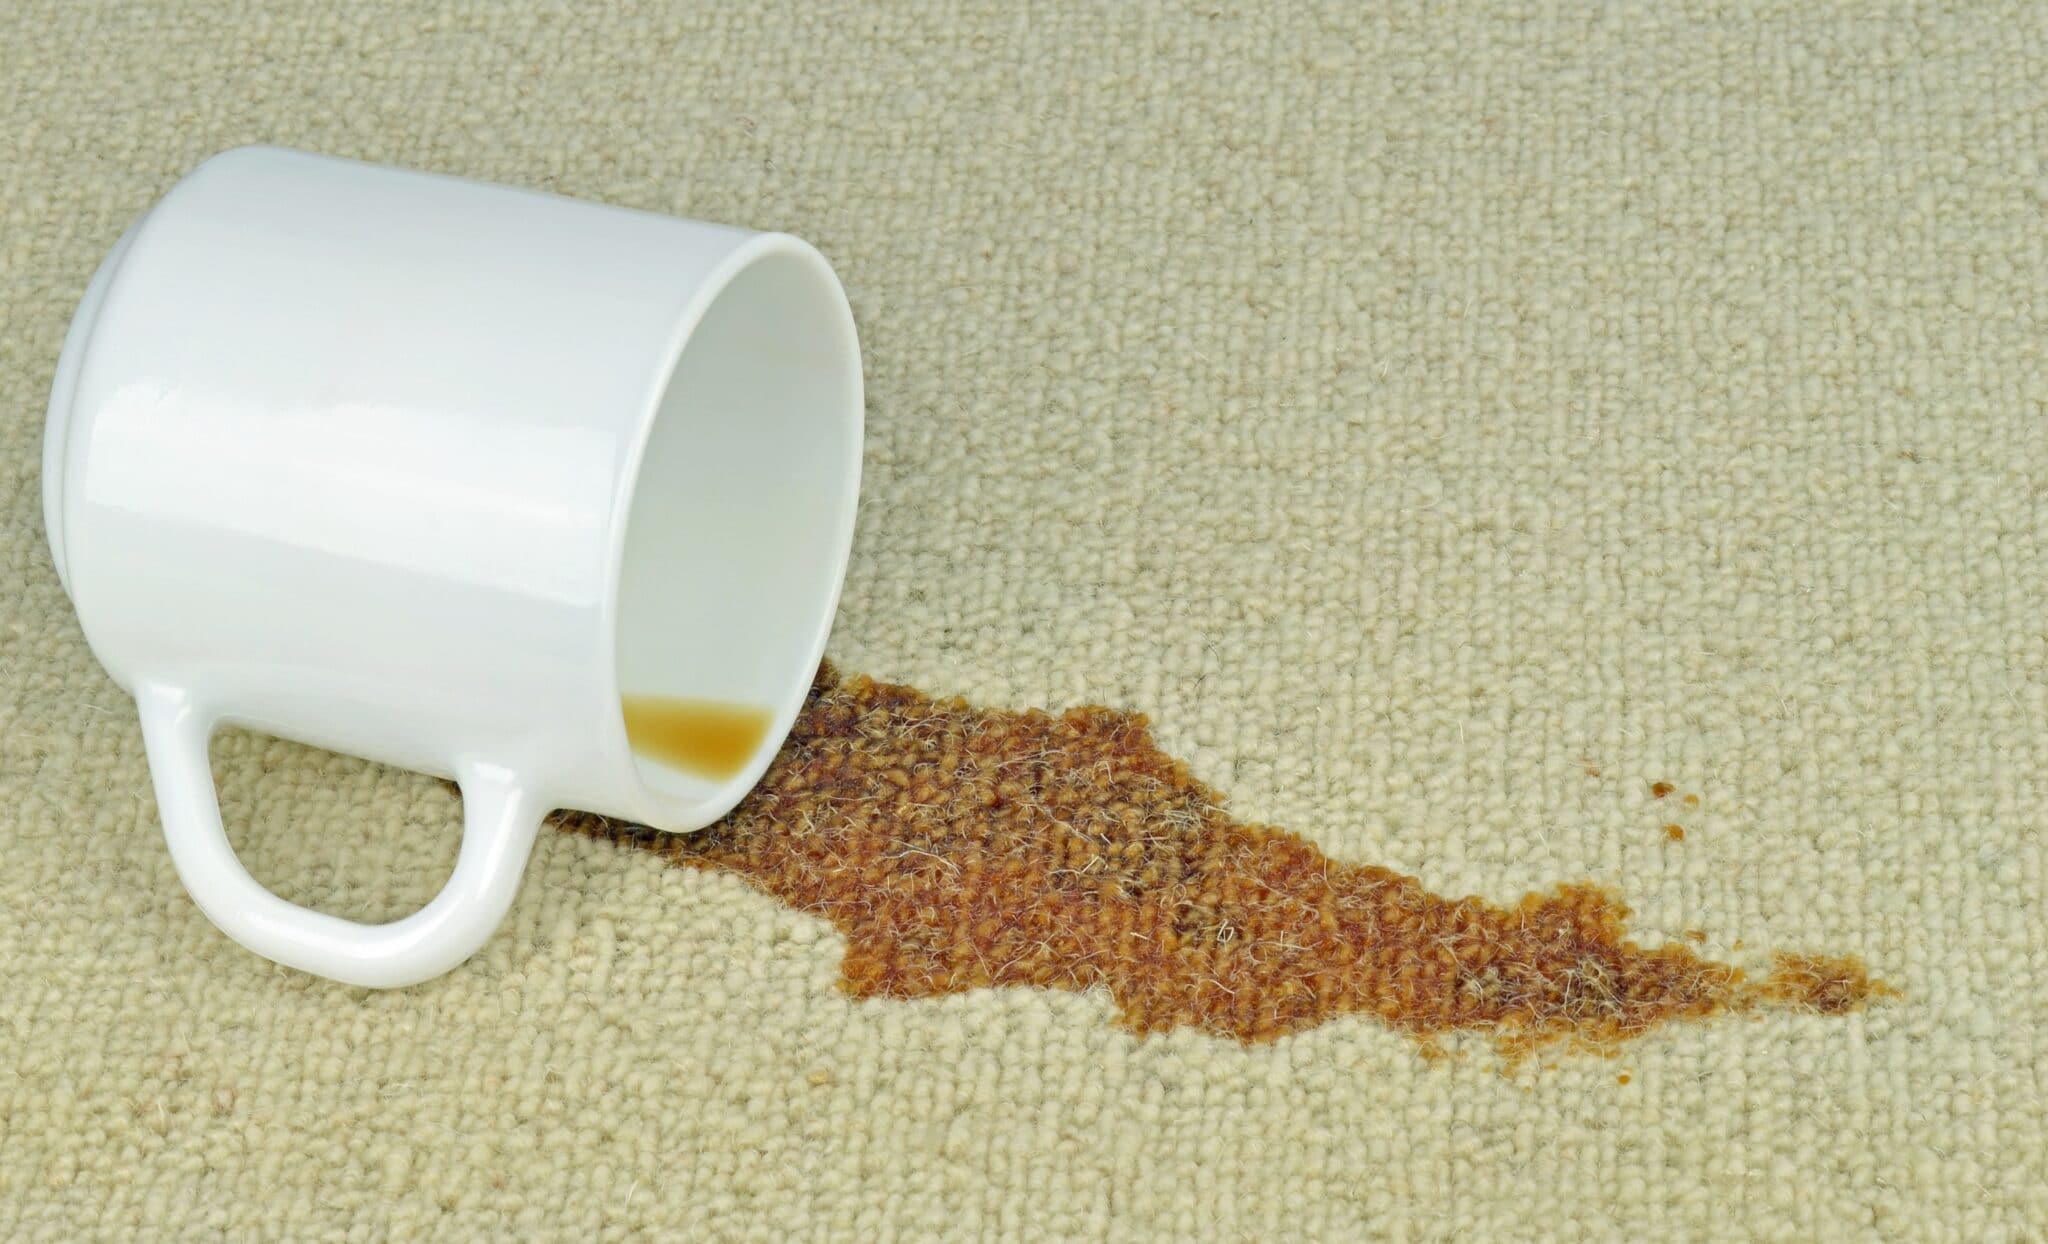 emergency carpet stain removers in kenosha, carpet stain removal in kenosha, emergency carpet stains in kenosha